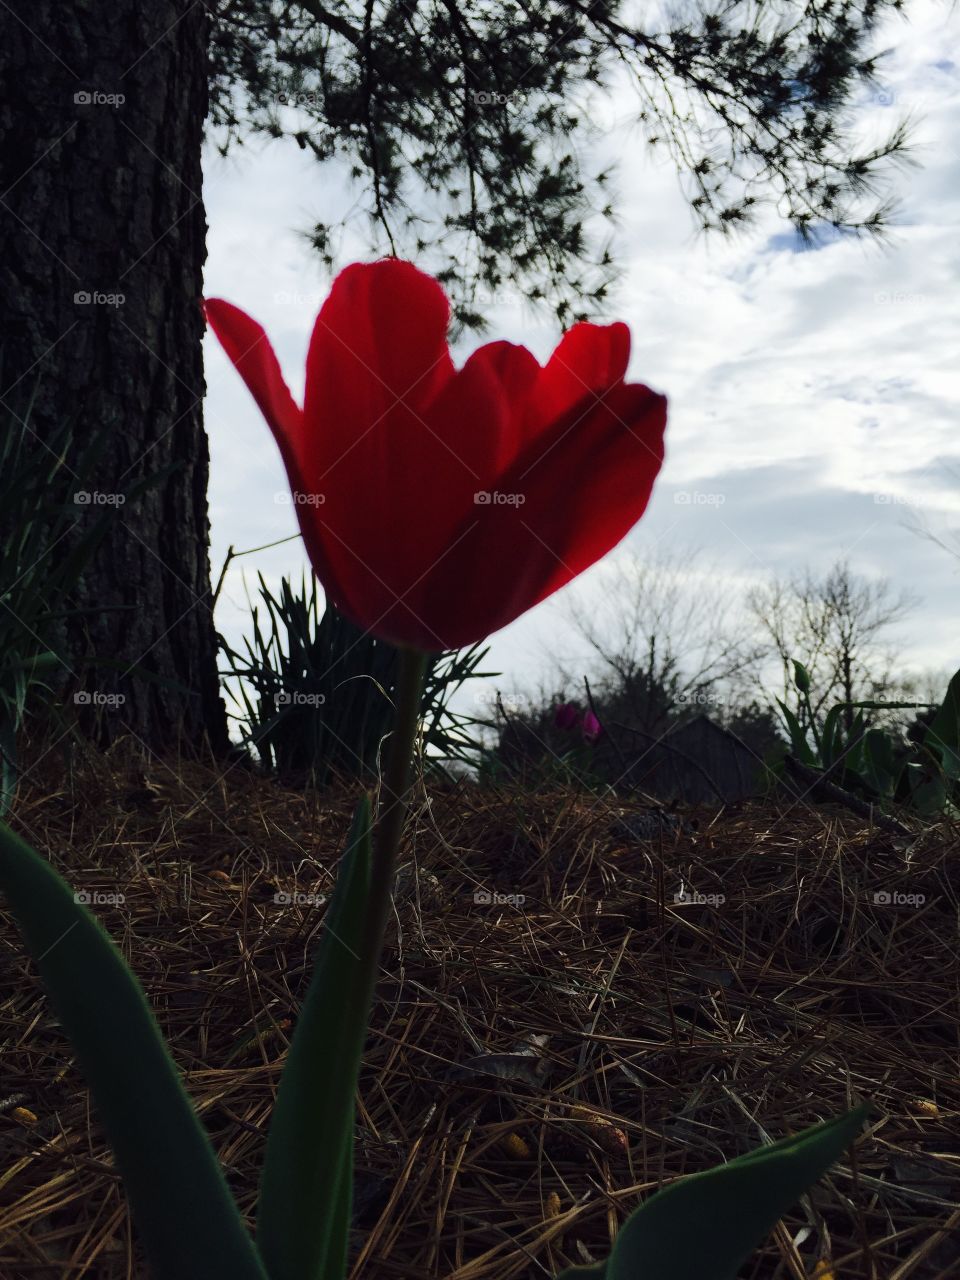 Tulip in the pines